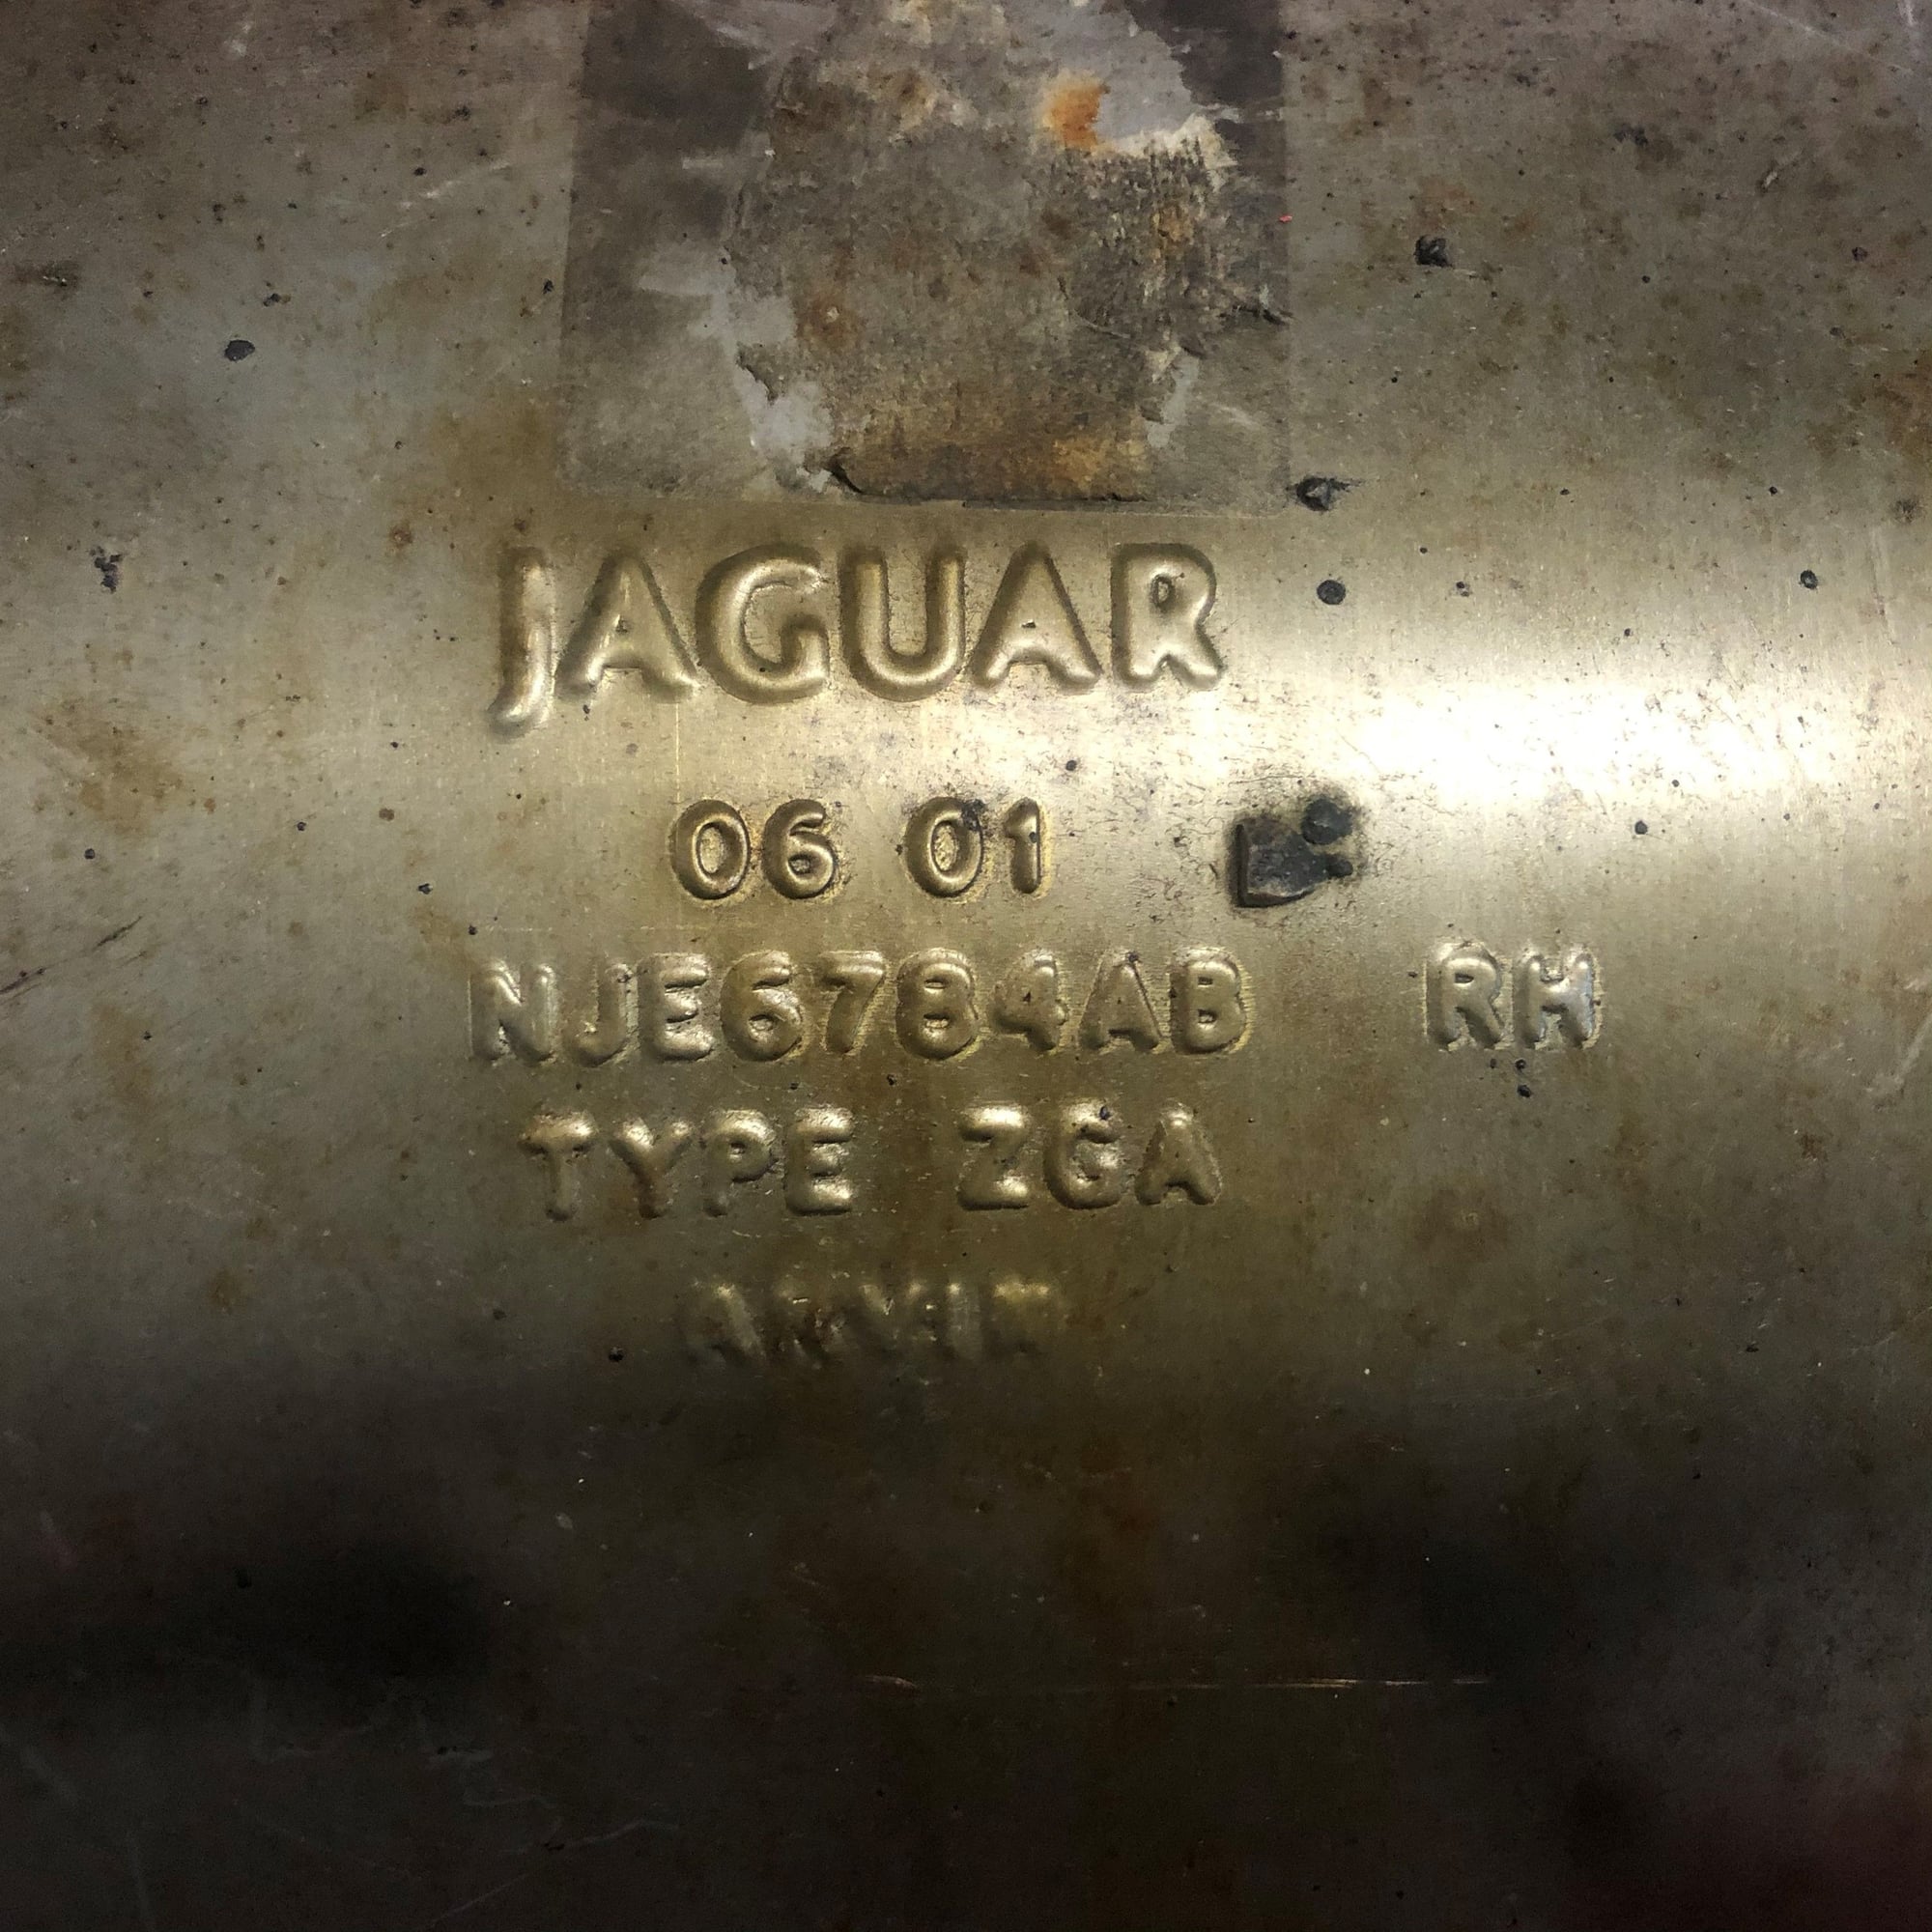 2002 Jaguar XKR - 2002 JAGUAR XKR 4.0L 8CYL Supercharged Left Rear muffler - Engine - Exhaust - $90 - Buffalo Grove, IL 60089, United States